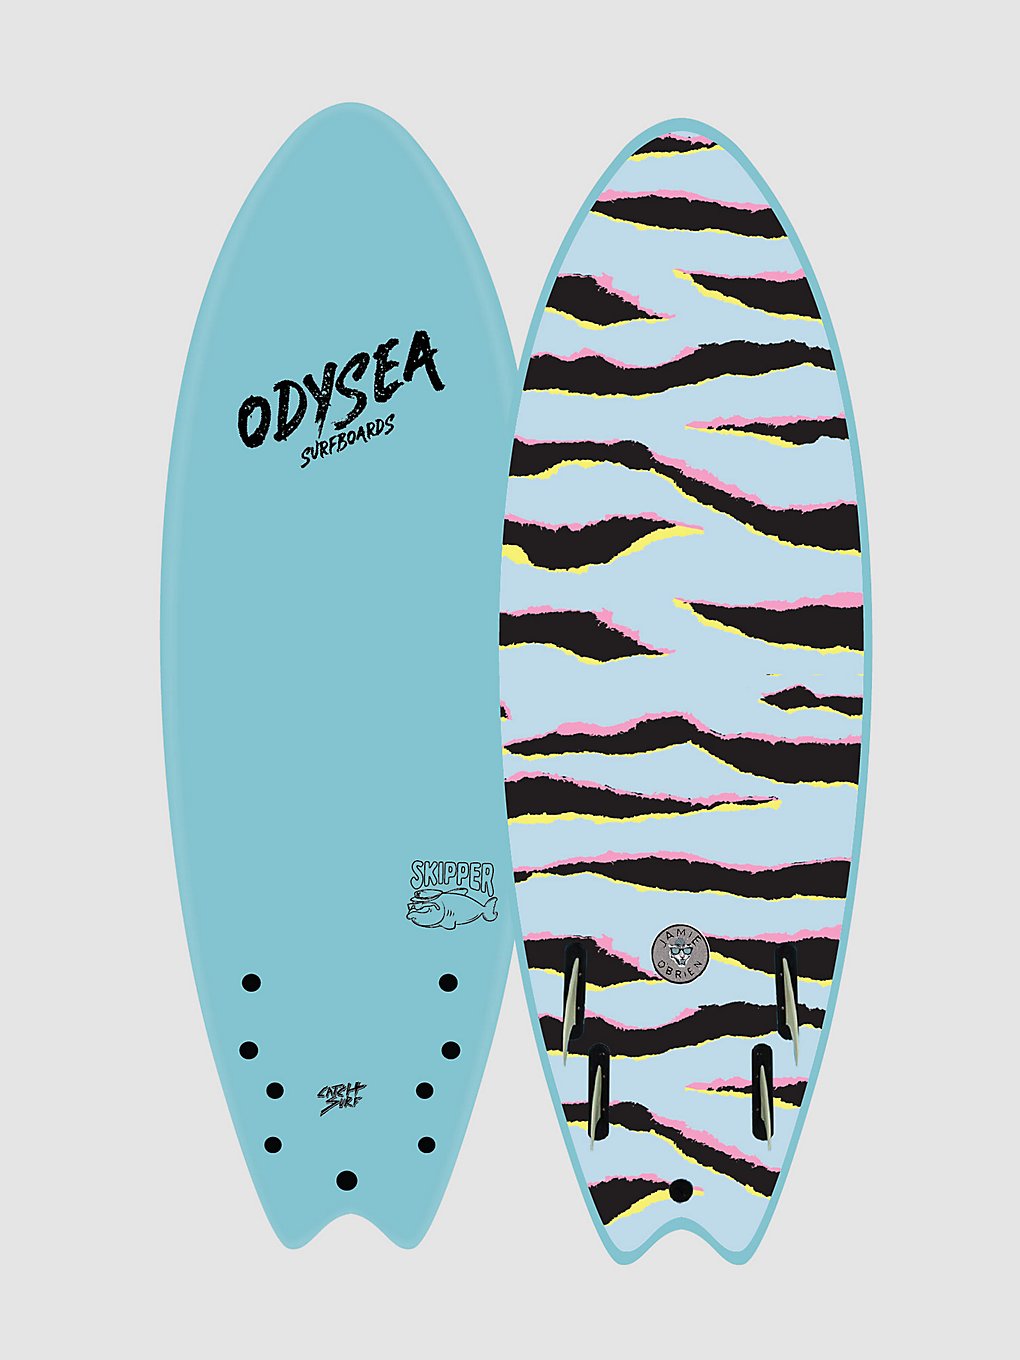 Catch Surf Odysea Skipper Pro Job Quad 6'0 Softtop Surfboard blå